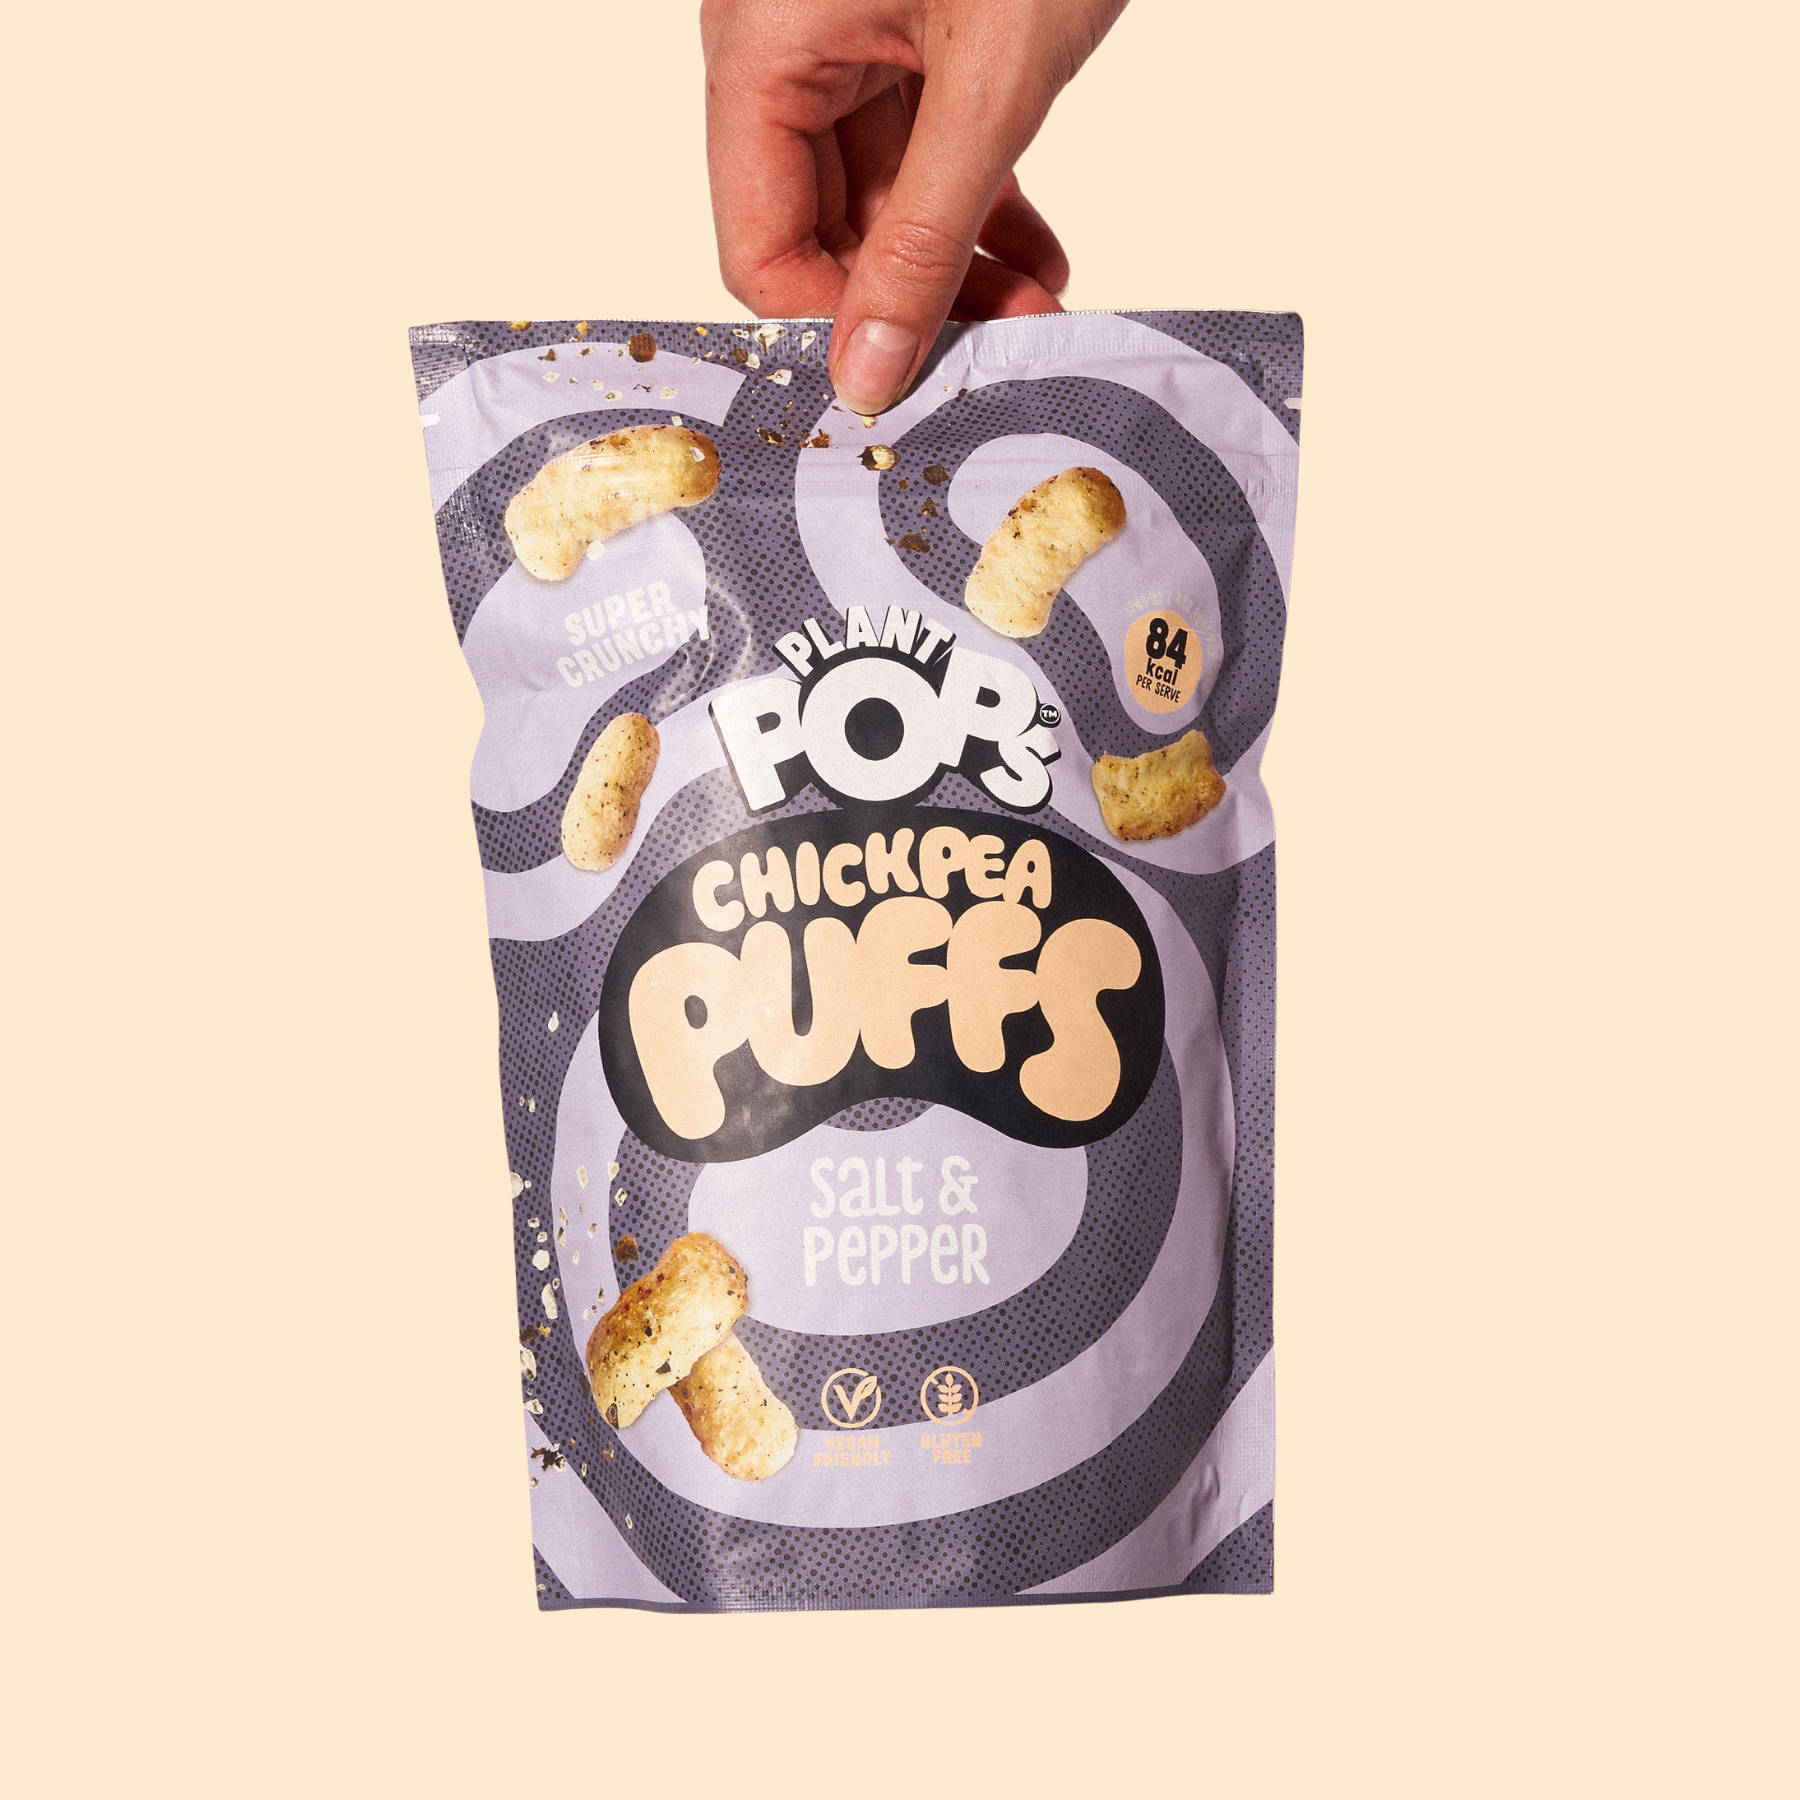 Irresistible Salt & Pepper Chickpea Puffs - Classic Crunch in an 80g Pack